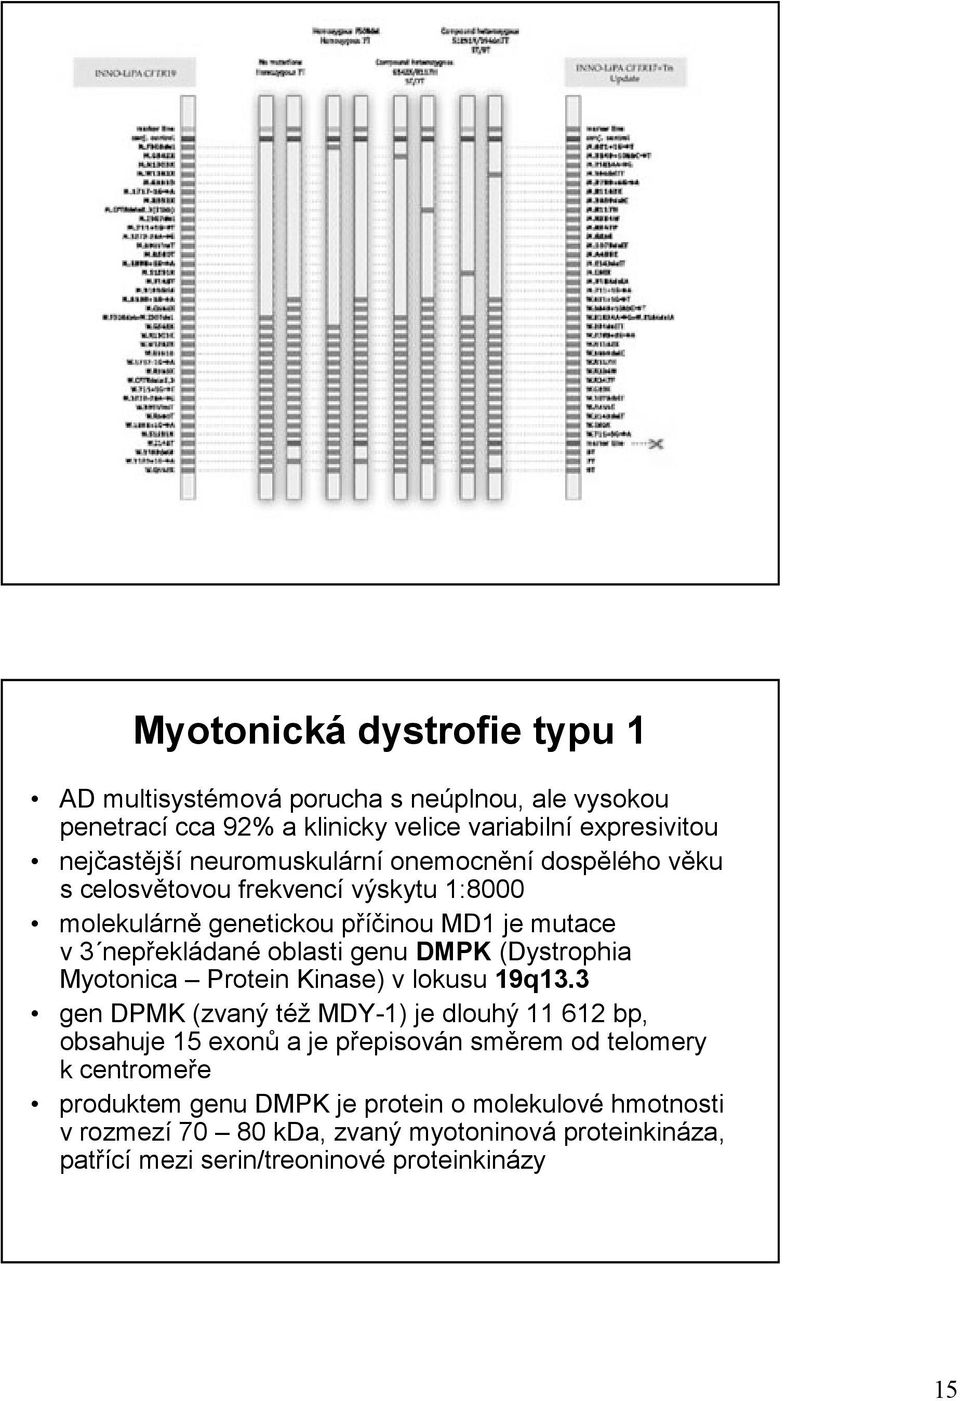 DMPK (Dystrophia Myotonica Protein Kinase) v lokusu 19q13.